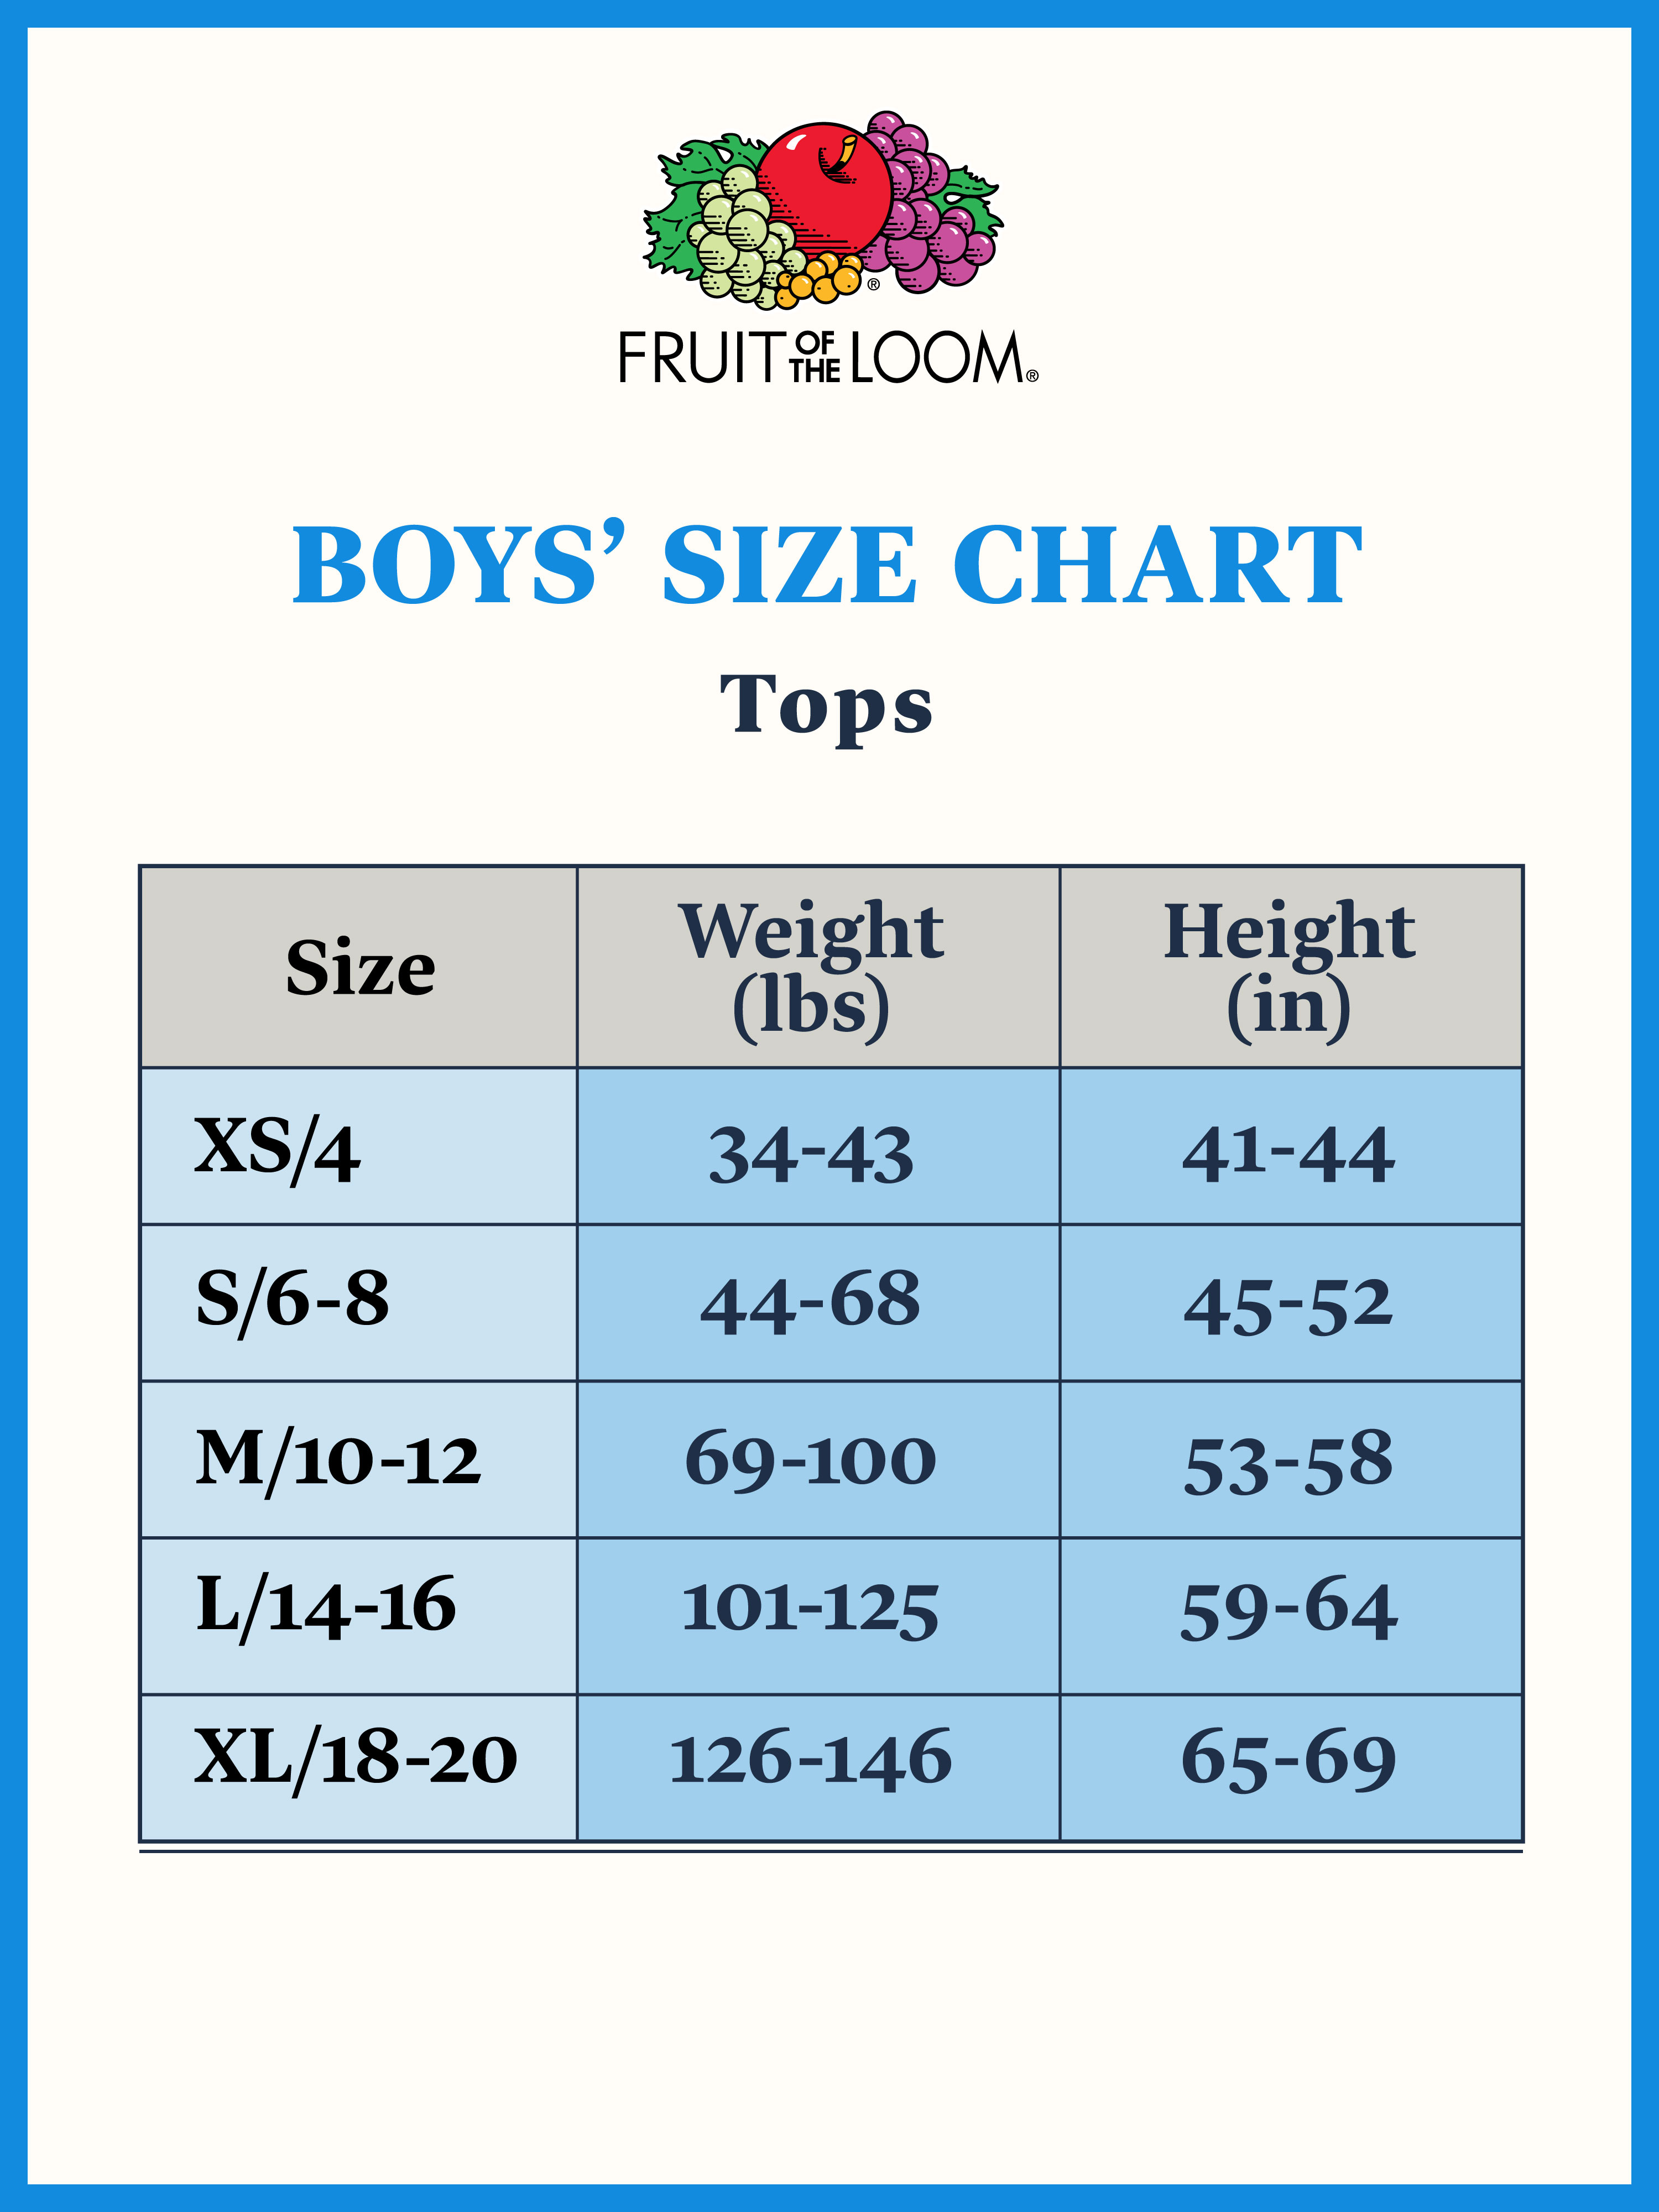 Fruit of the Loom Boys Undershirts, Super Value White Tank, 7 Pack (Little Boys & Big Boys) - image 4 of 4